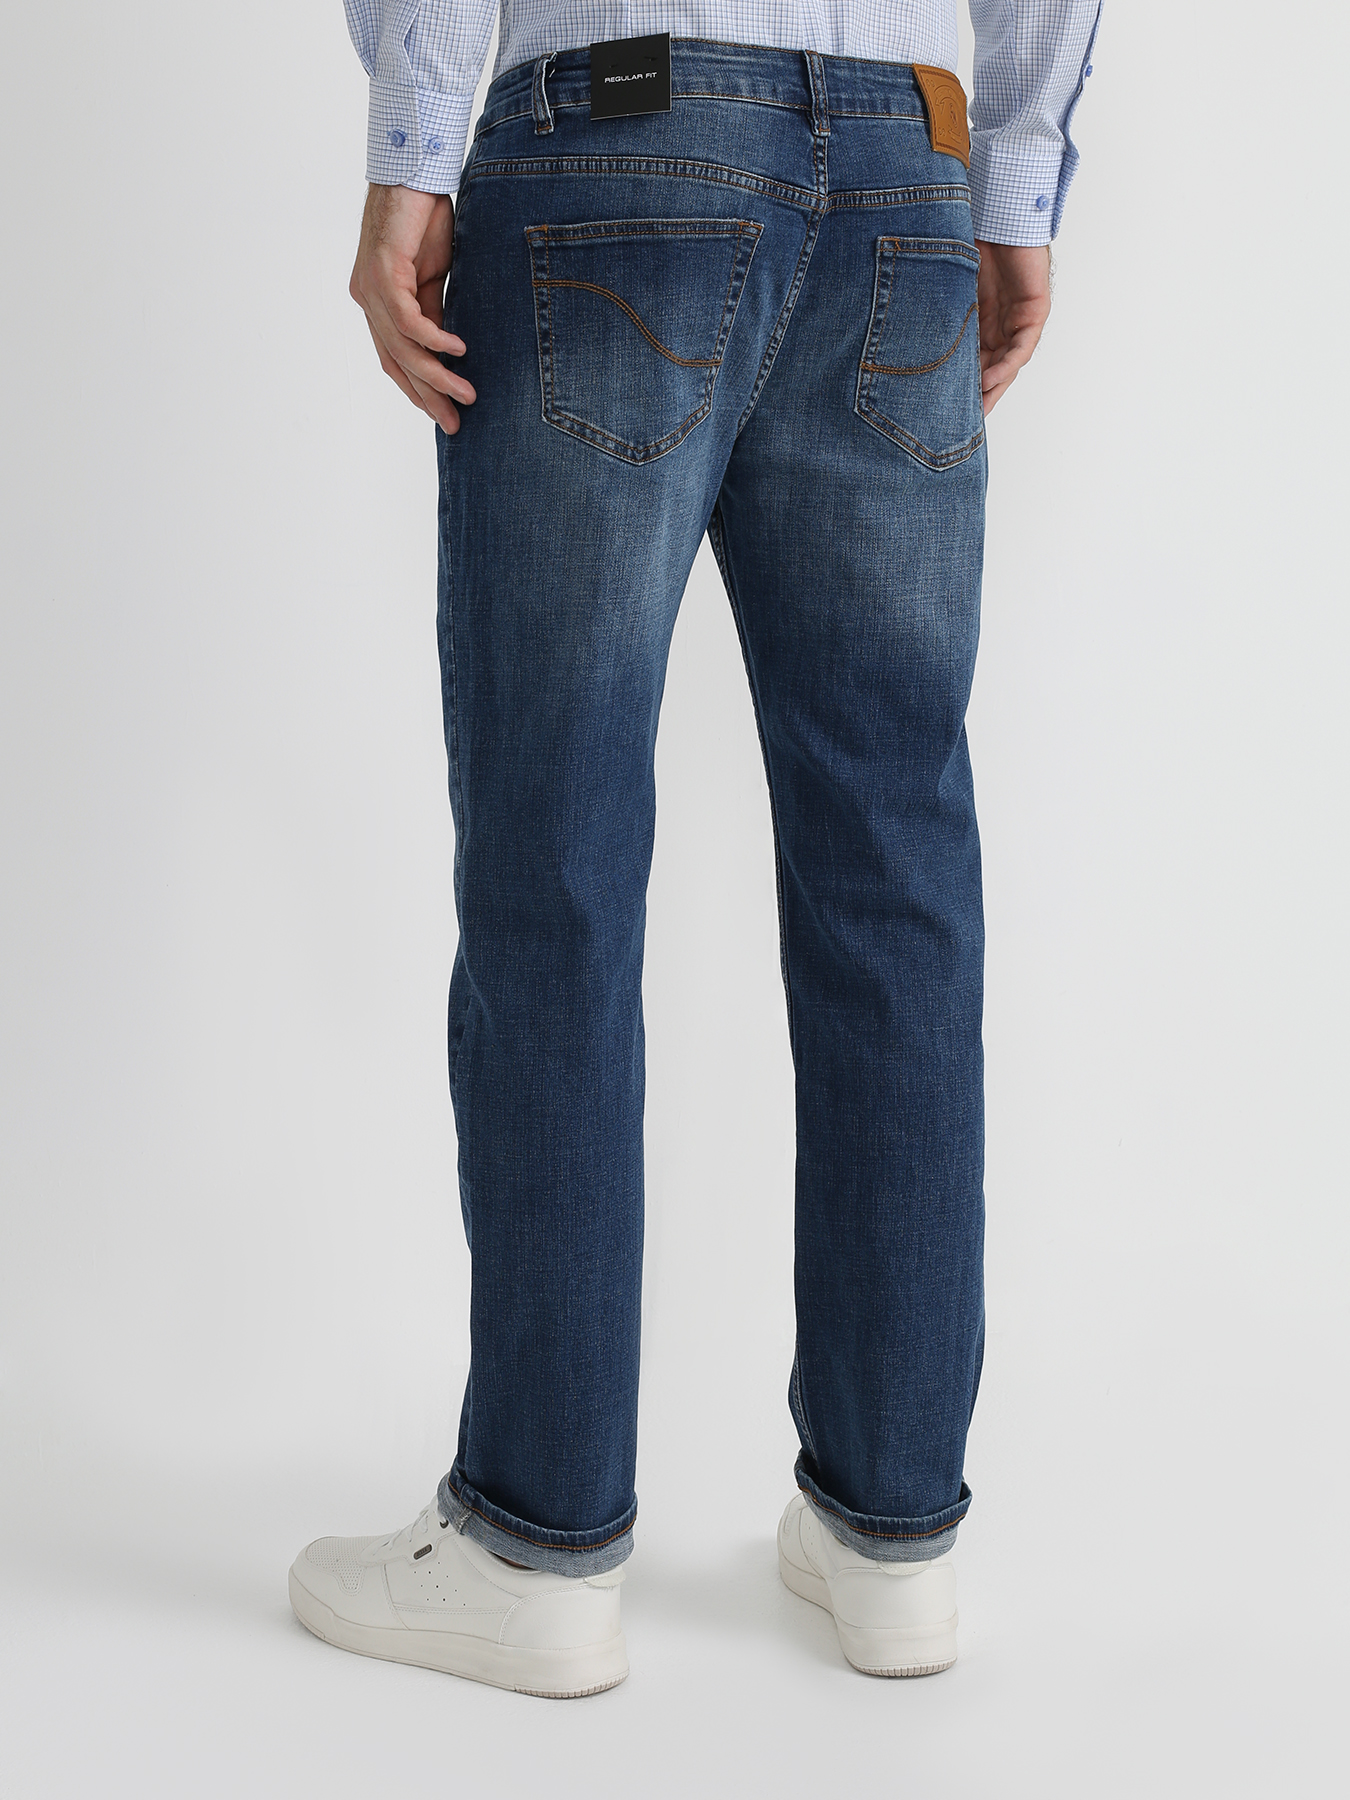 Alessandro Manzoni Мужские джинсы 319690-016 Фото 2